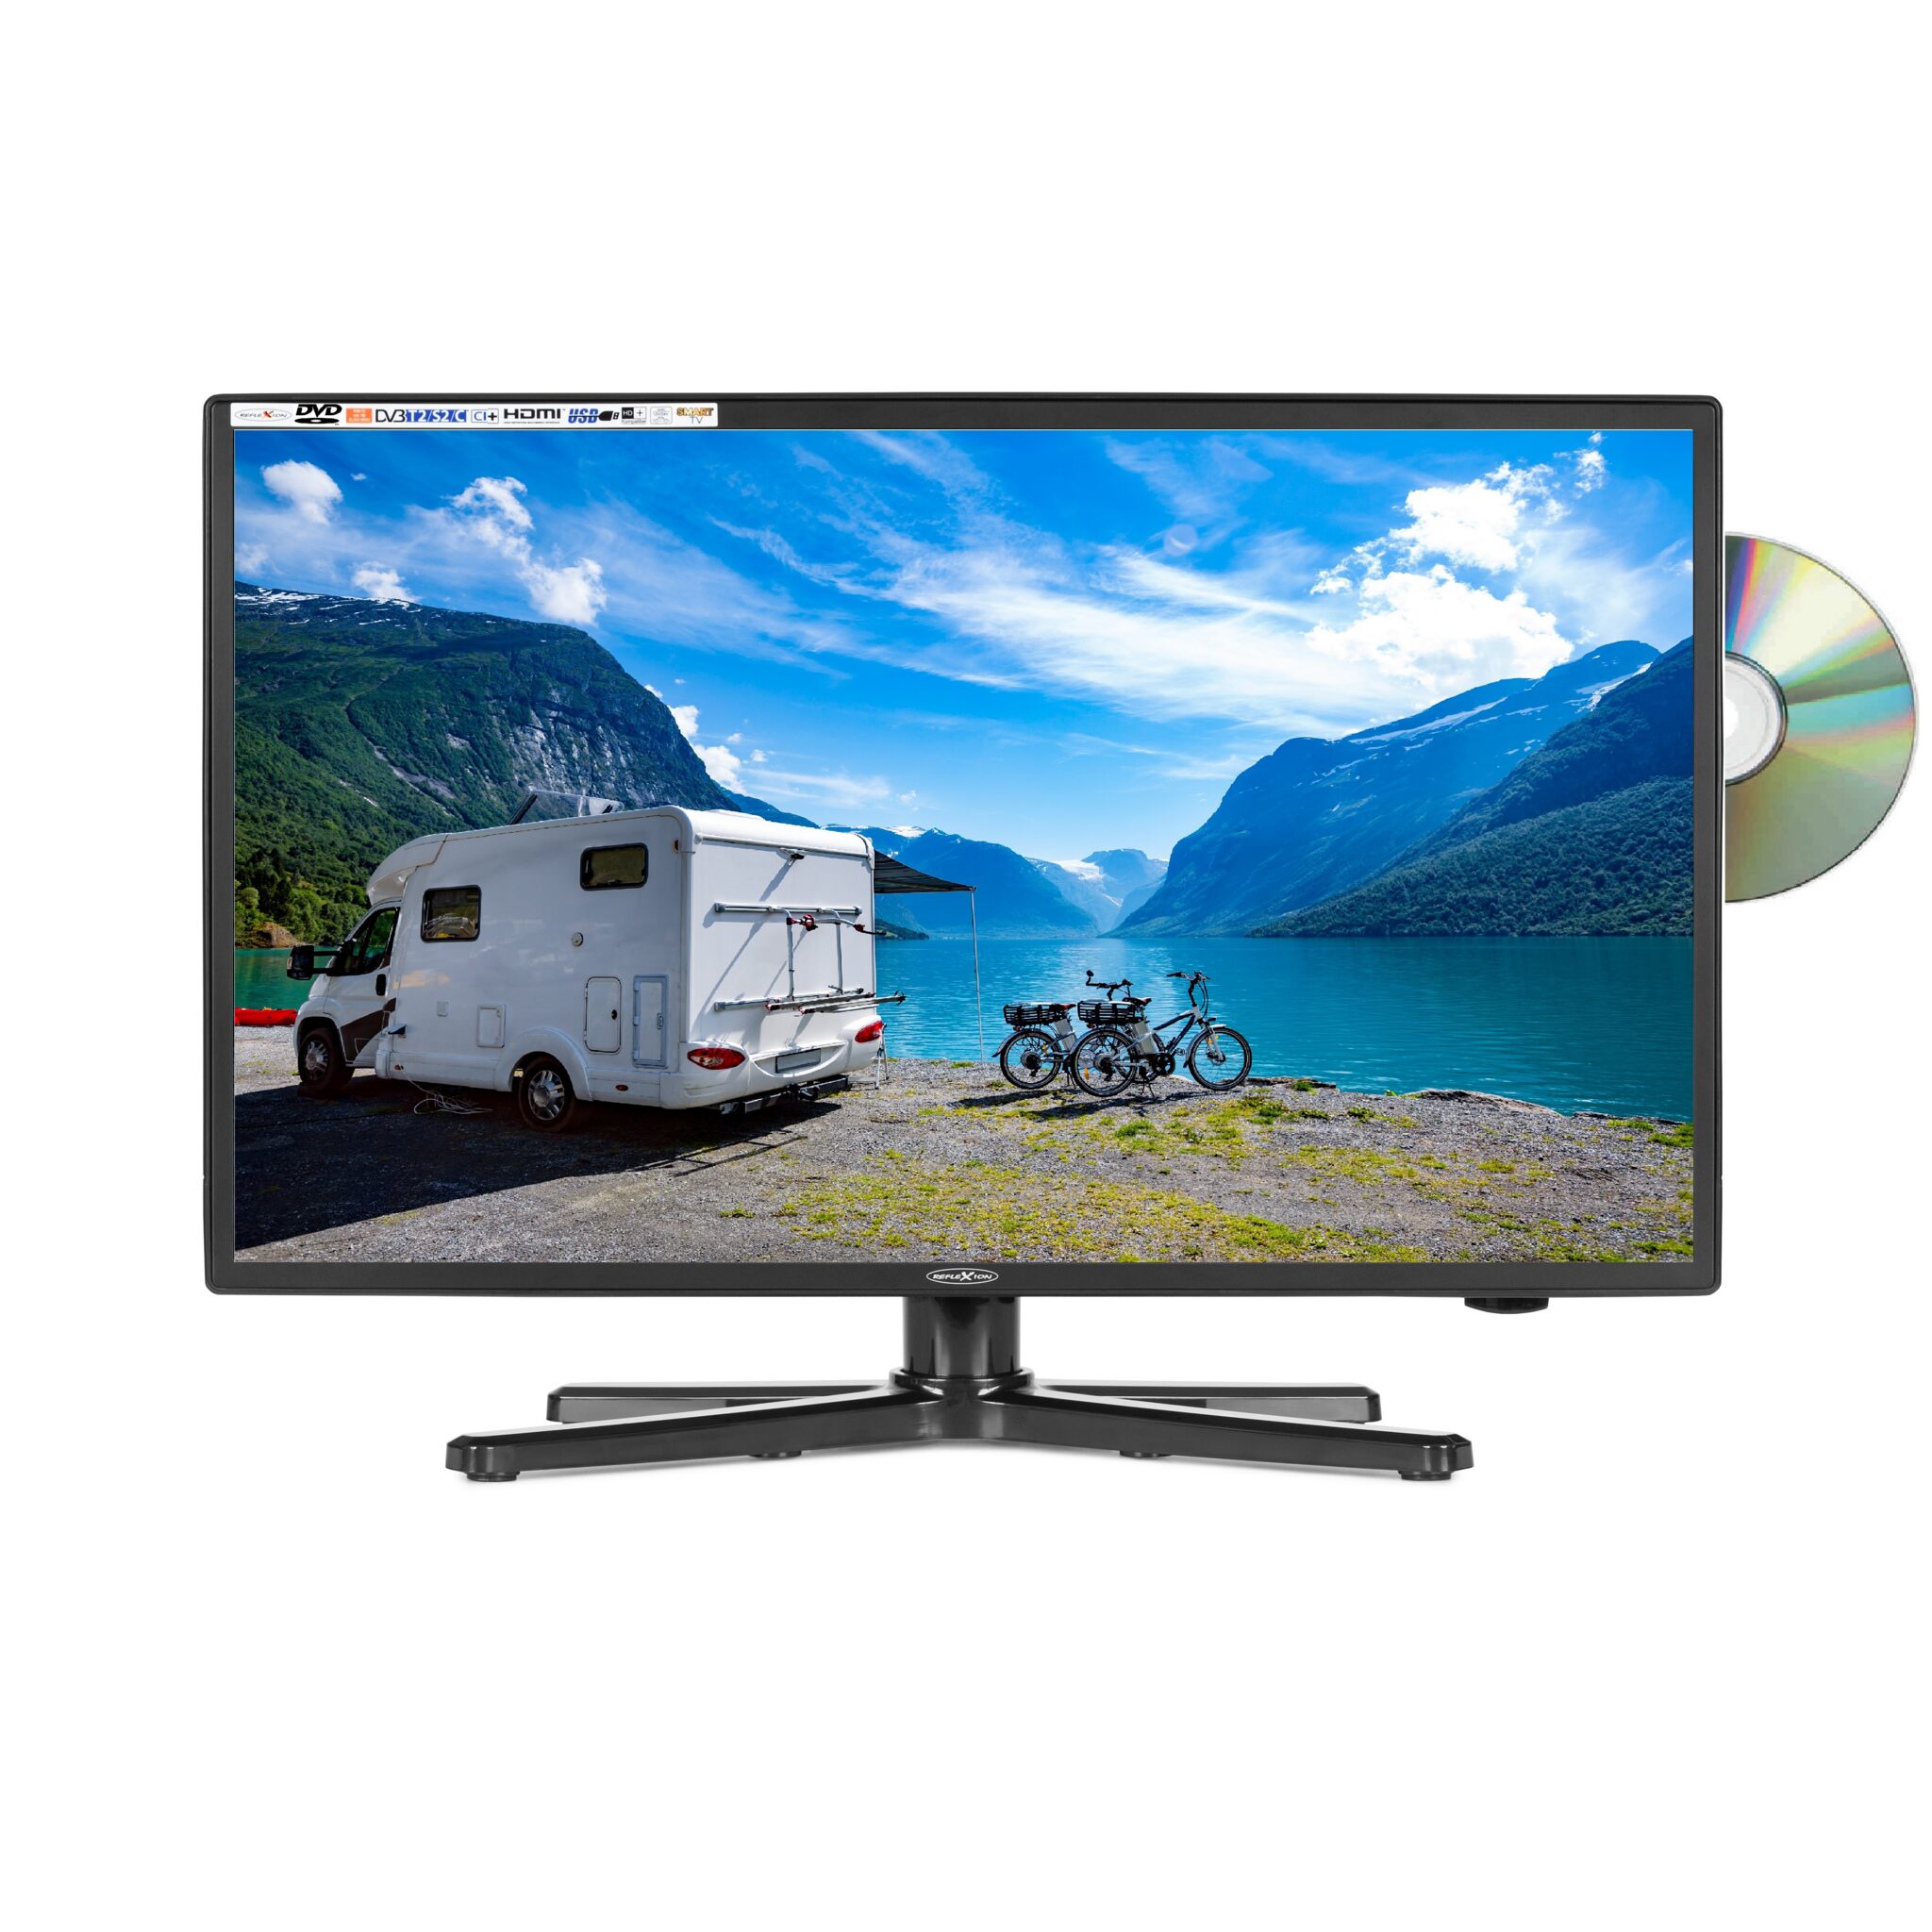 Reflexion 19" SMART LED-TV LDDW19i+ fürs Boot, Camping mit 12/24/240 V, WLAN, DVD